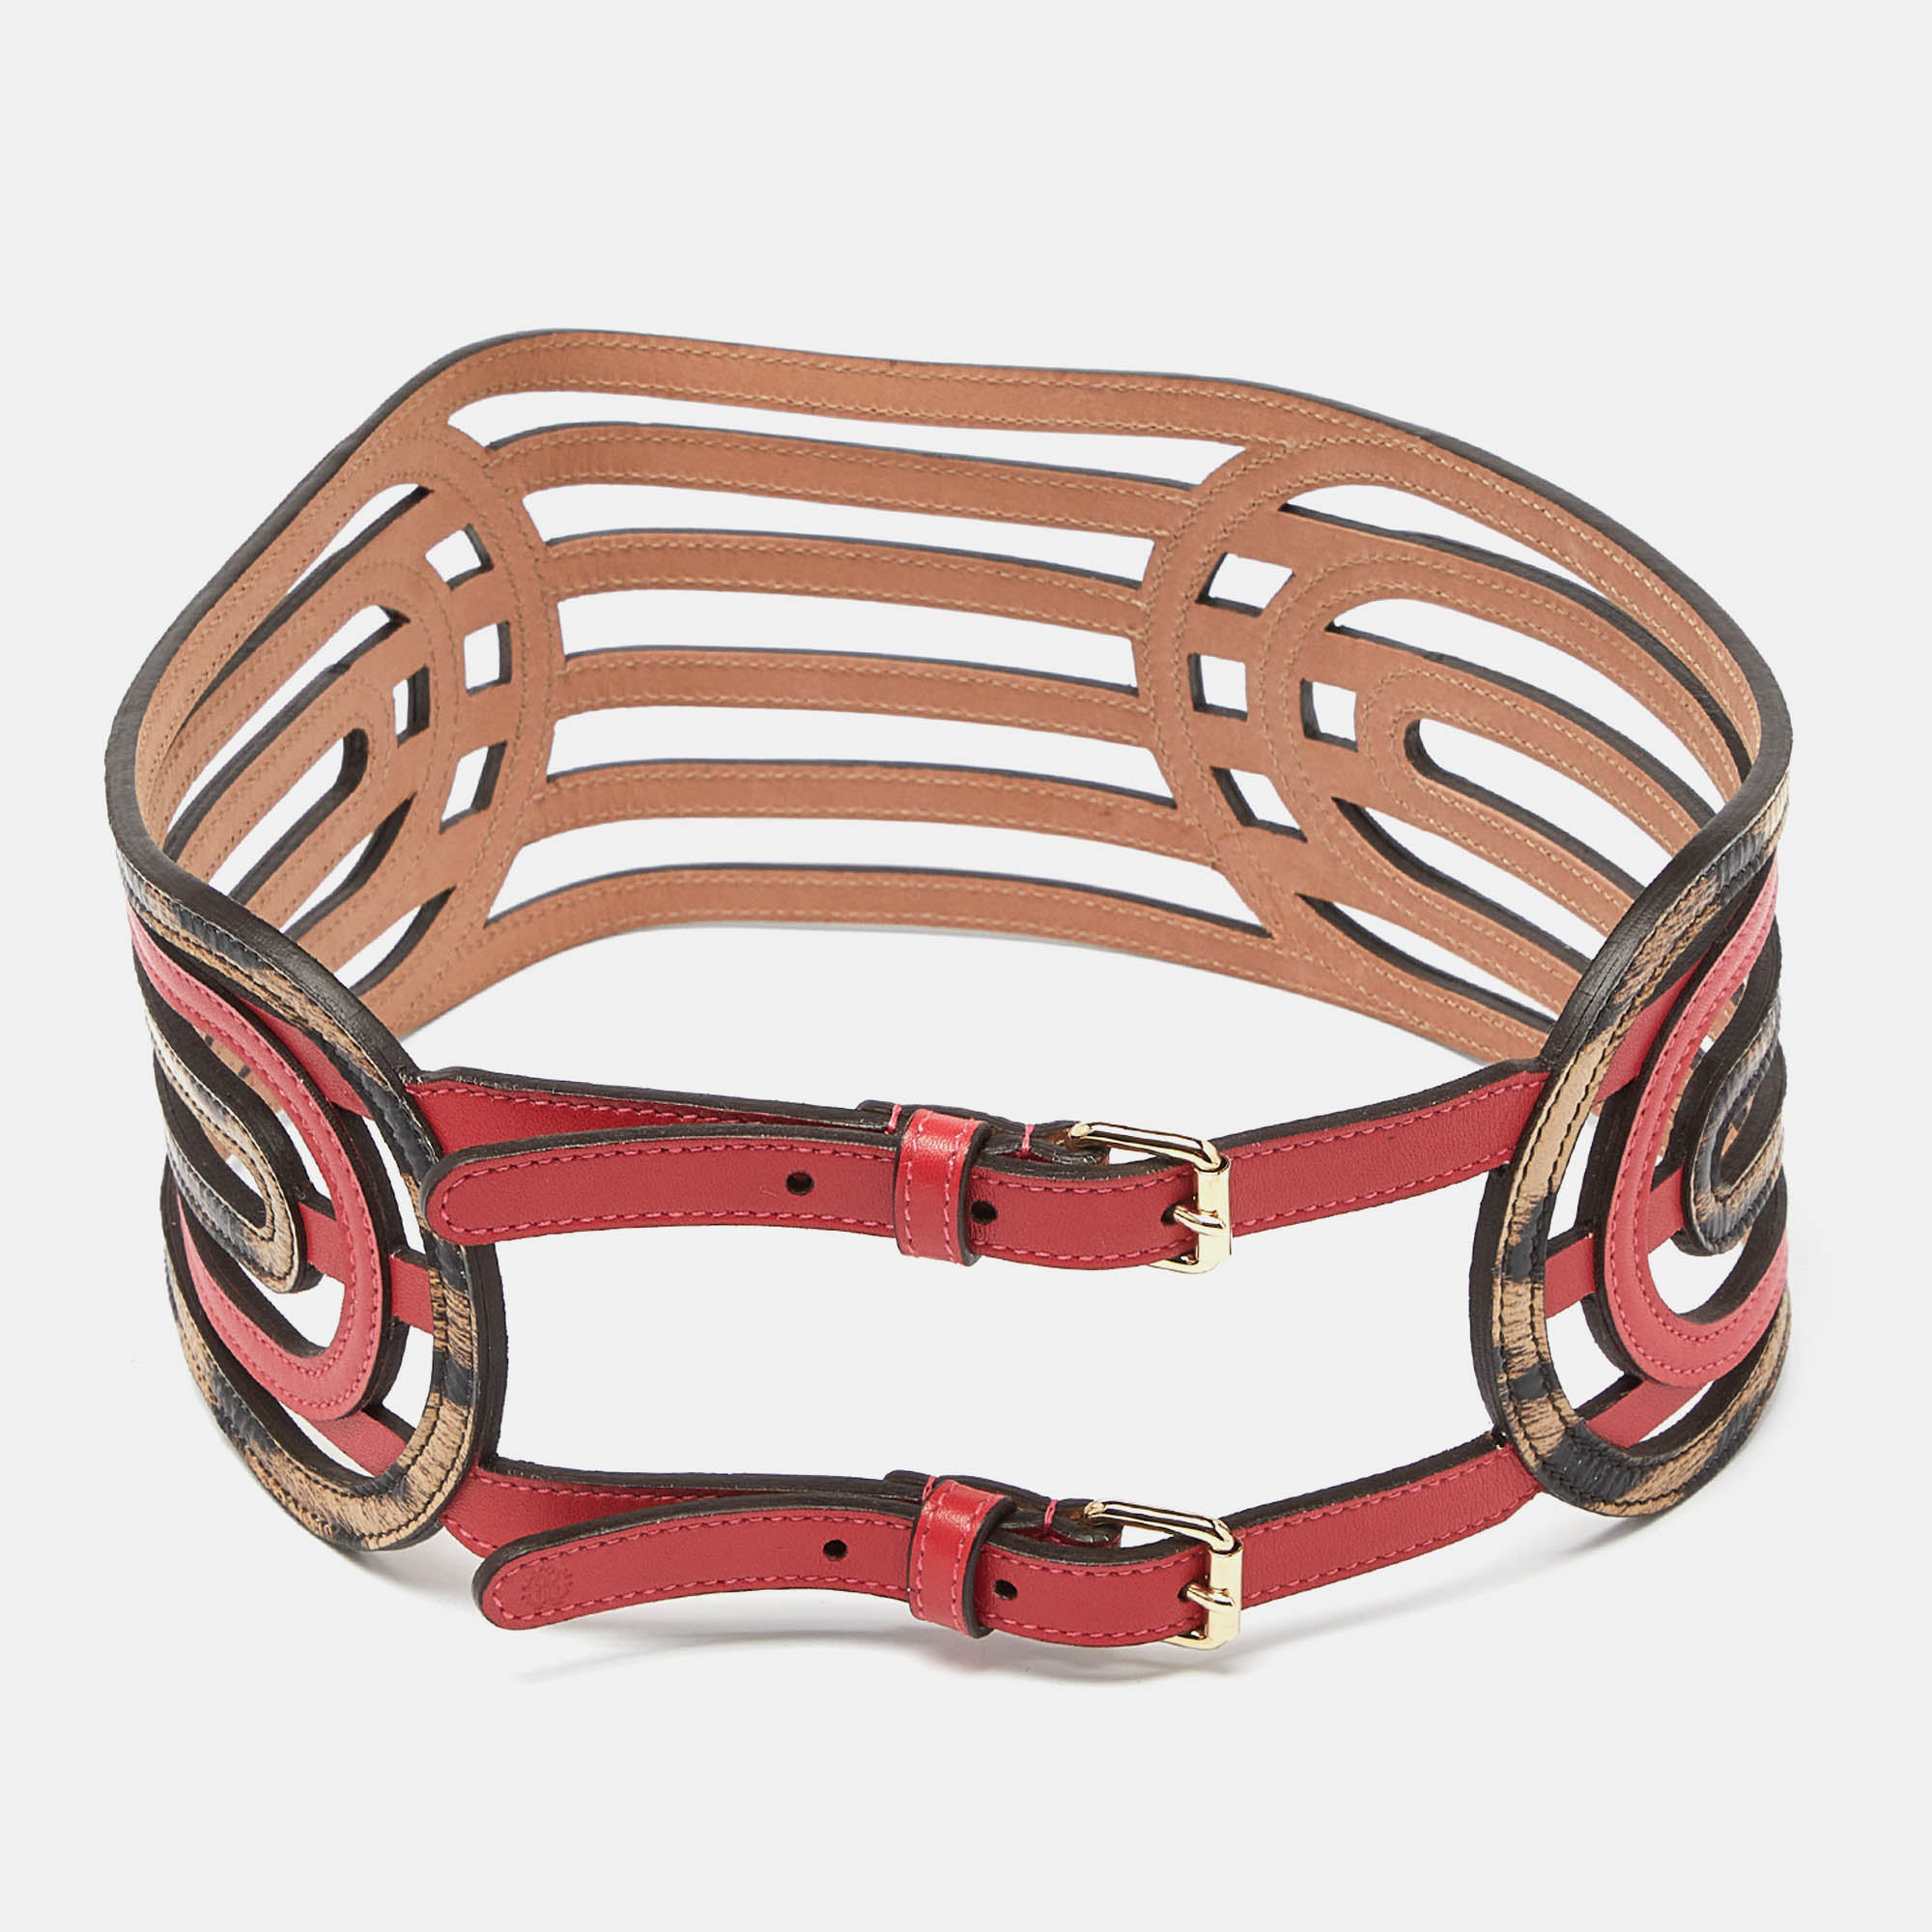 Roberto cavalli pink/beige leopard print leather strappy wide belt 75cm